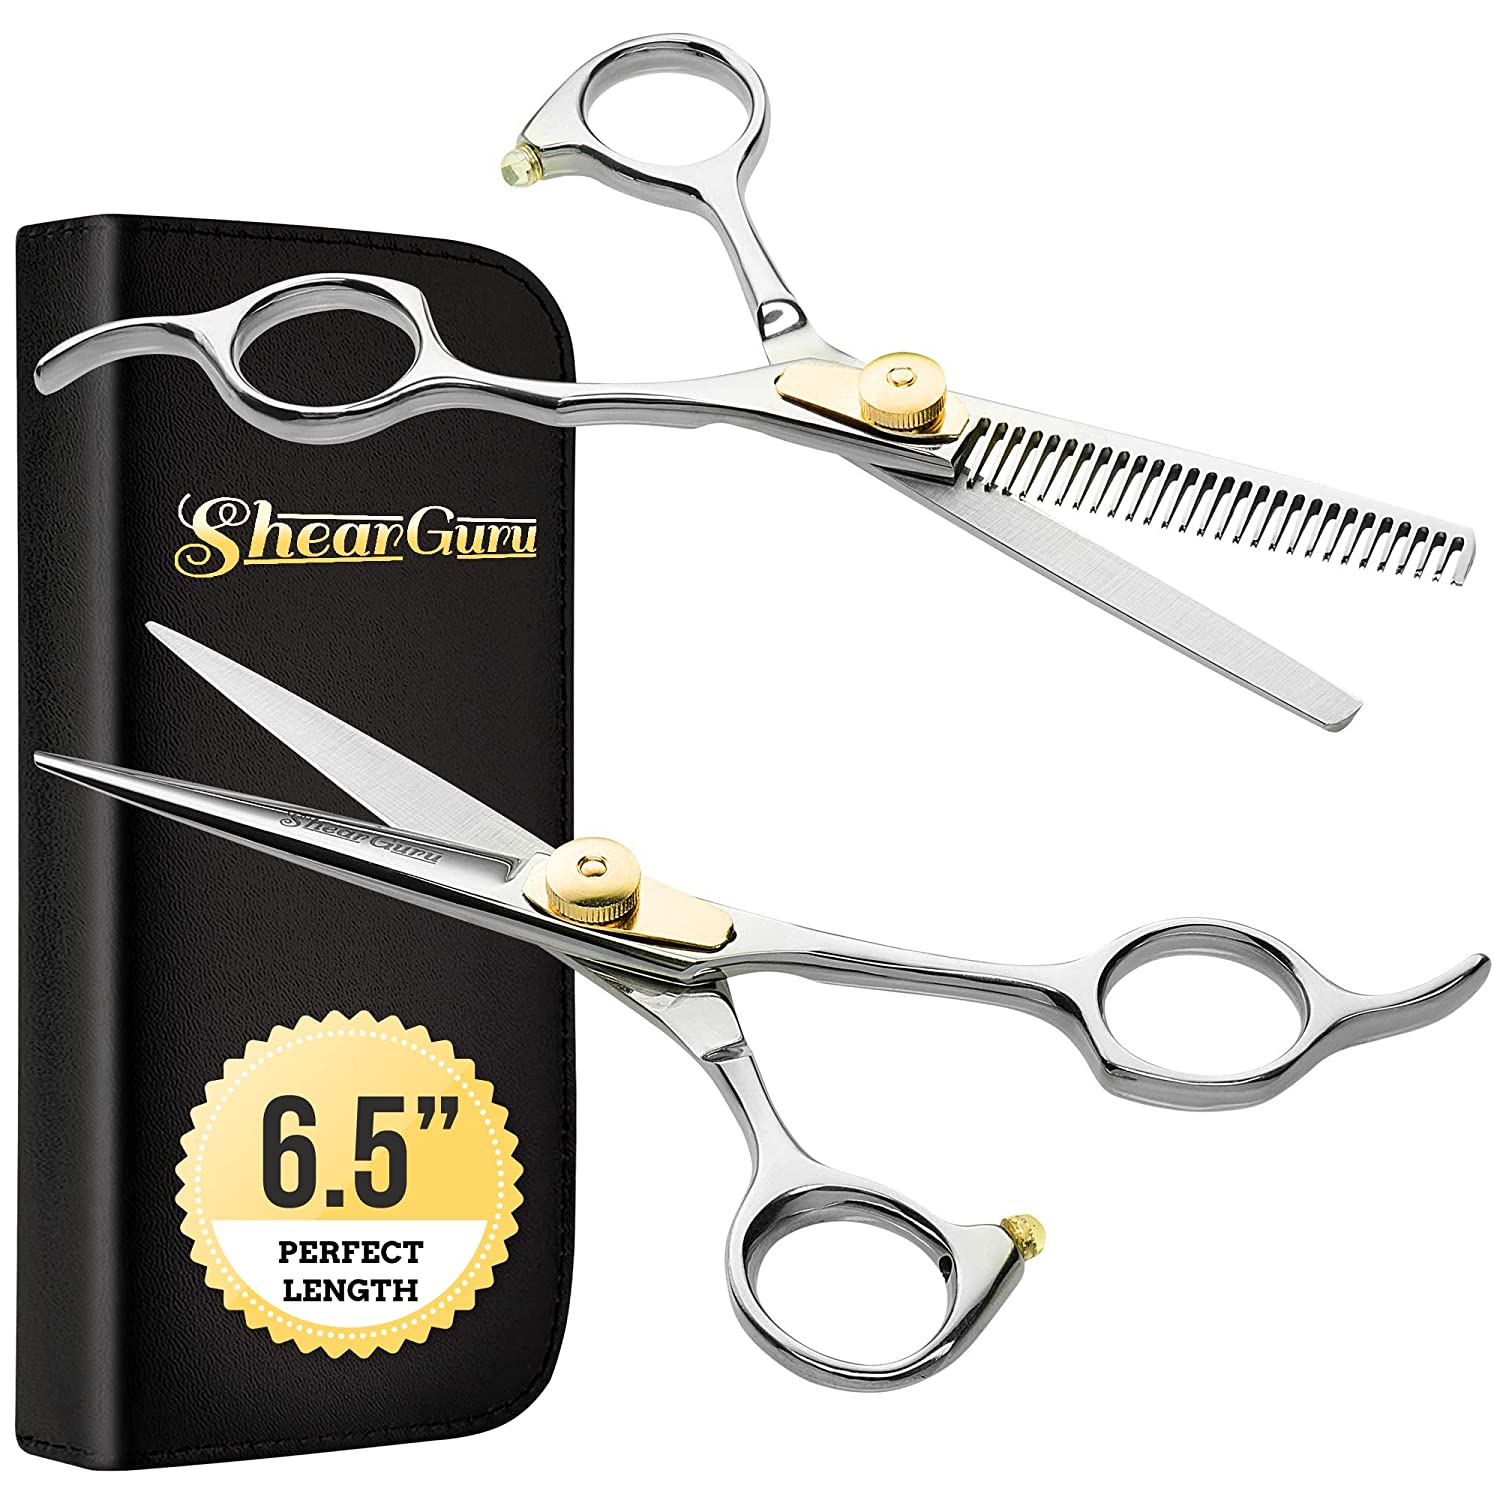 ShearGuru Thinning Shears & Hairdressers’ Scissors Set, 3-Piece